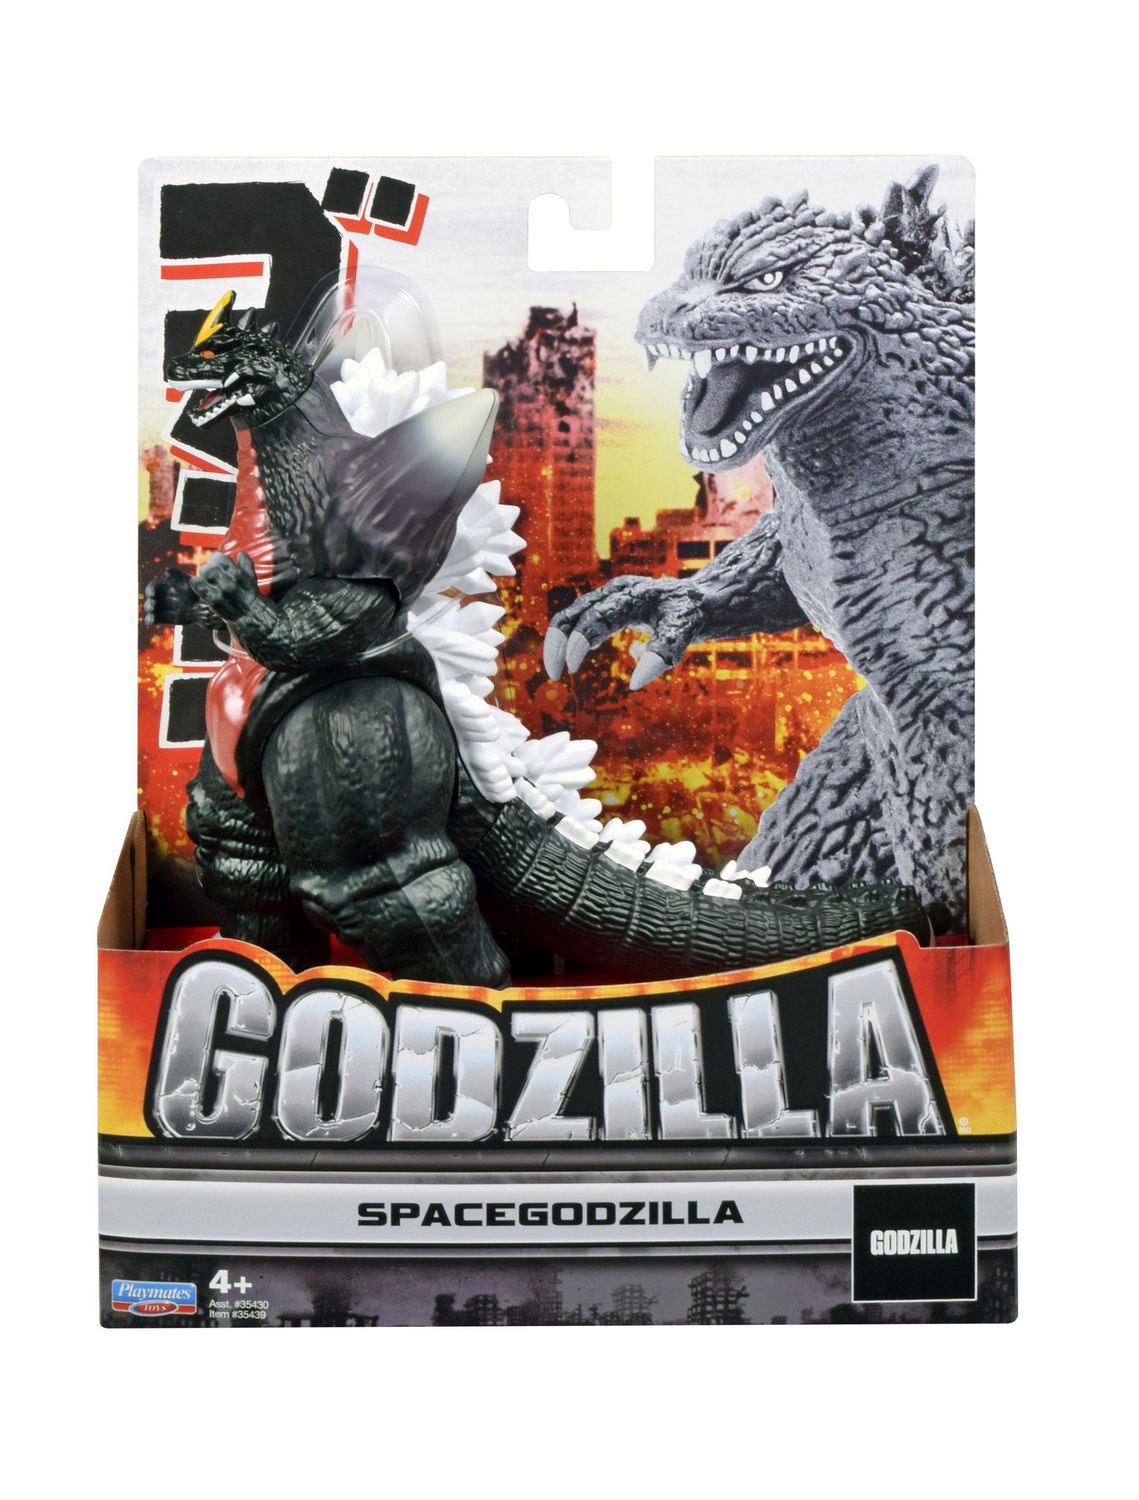 Space Godzilla Vinyl Figure 10" Long 7" Tall Playmates Toys 2020 New in Box 